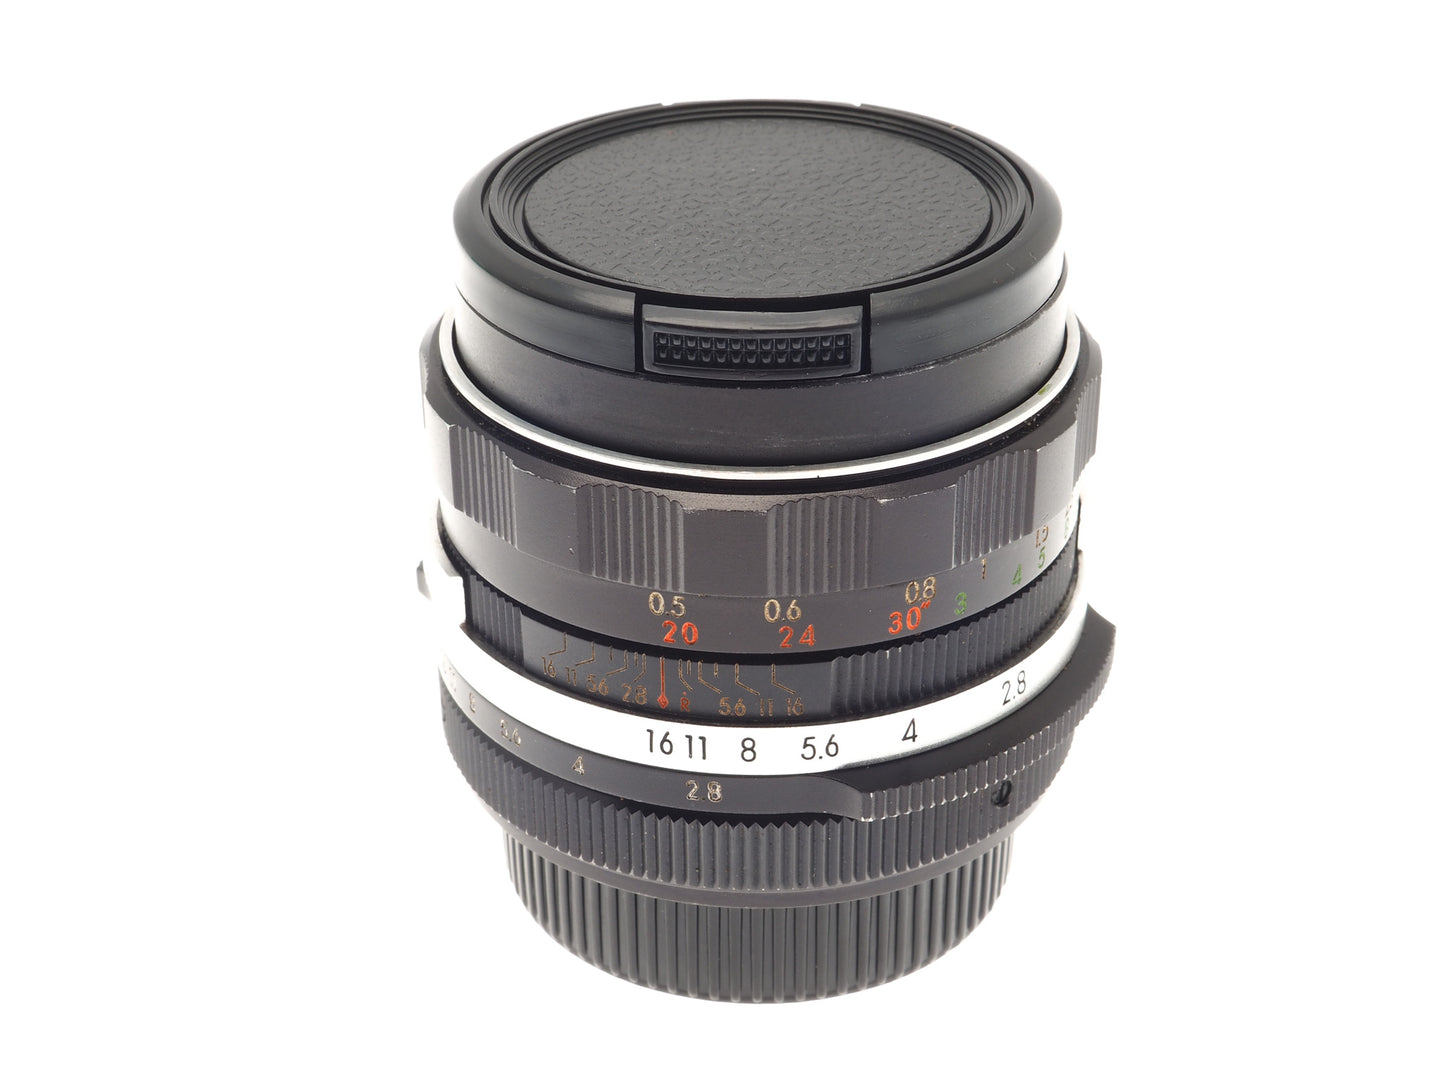 Soligor 35mm f2.8 - Lens